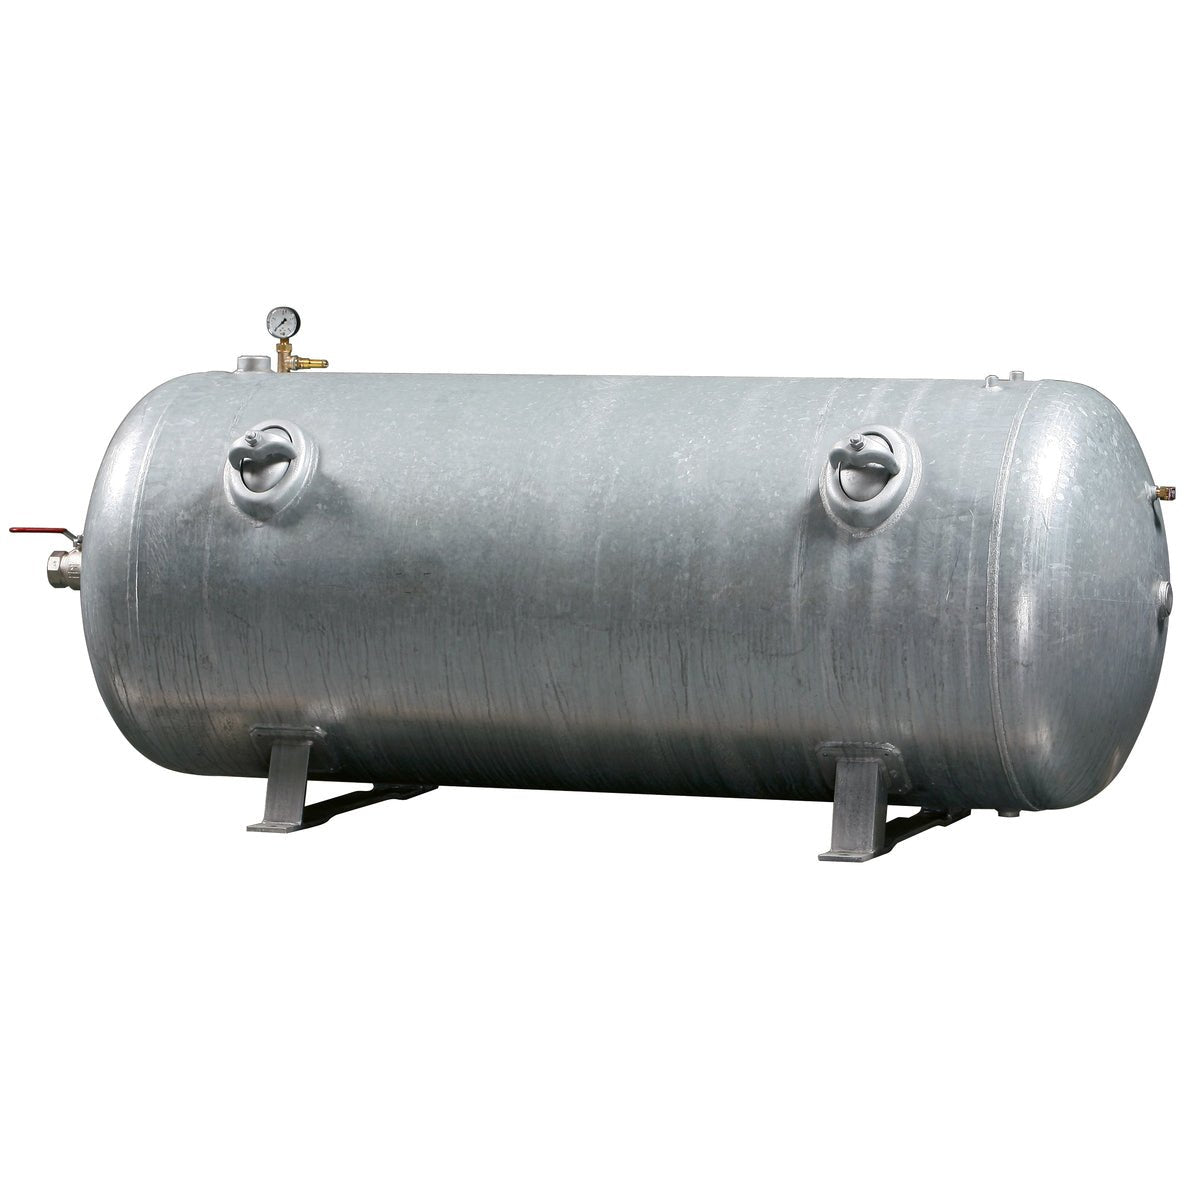 Kaeser Druckluftbehälter 1000/11 lg. CE/PED